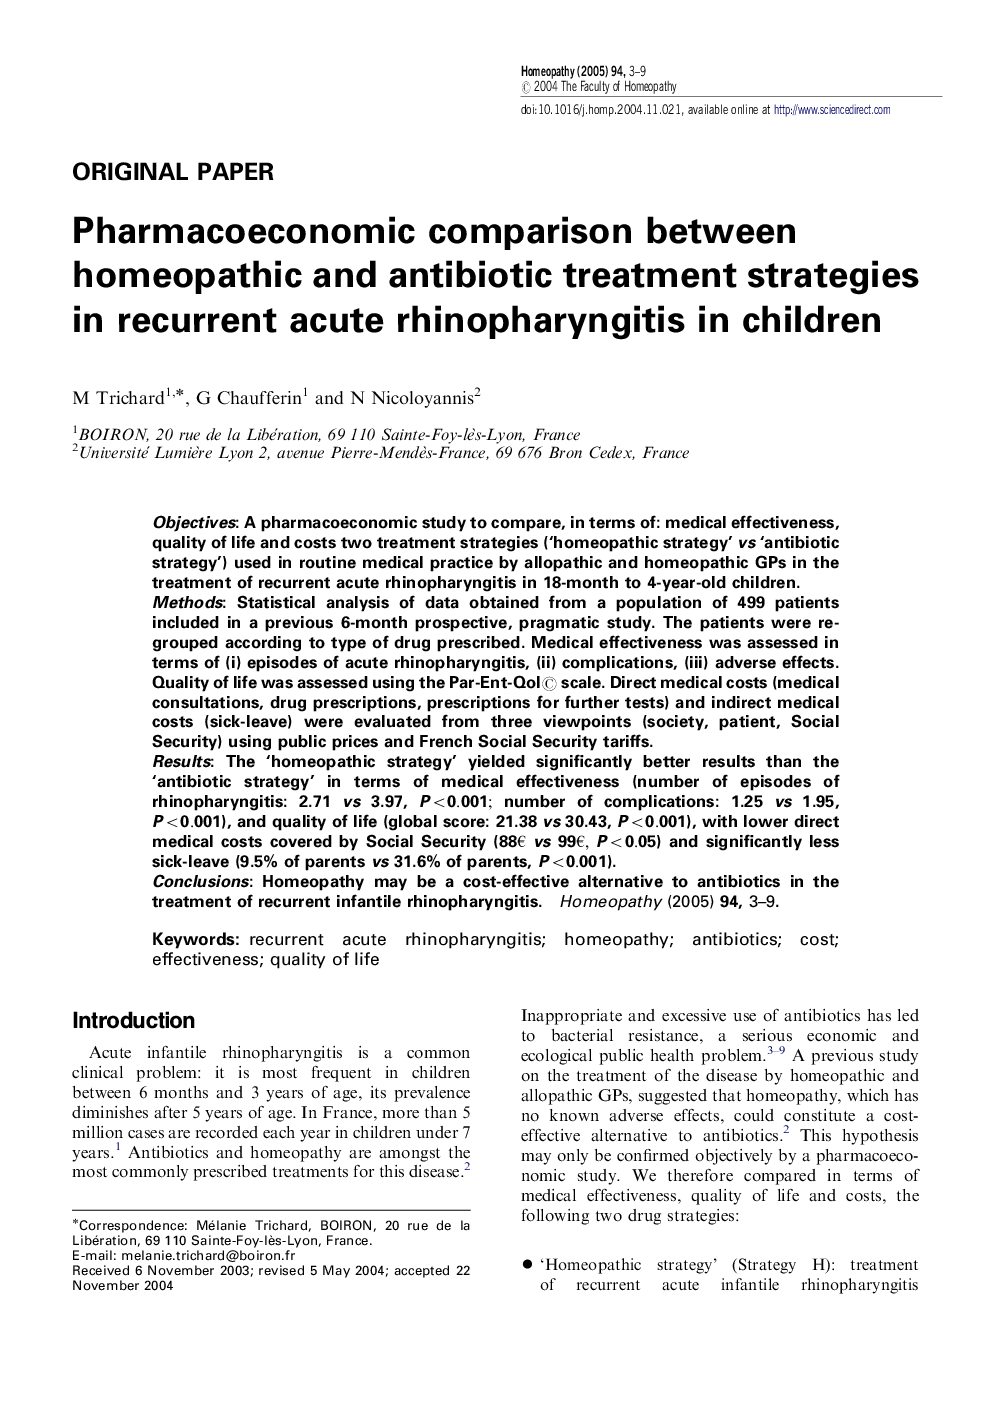 Pharmacoeconomic comparison between homeopathic and antibiotic treatment strategies in recurrent acute rhinopharyngitis in children